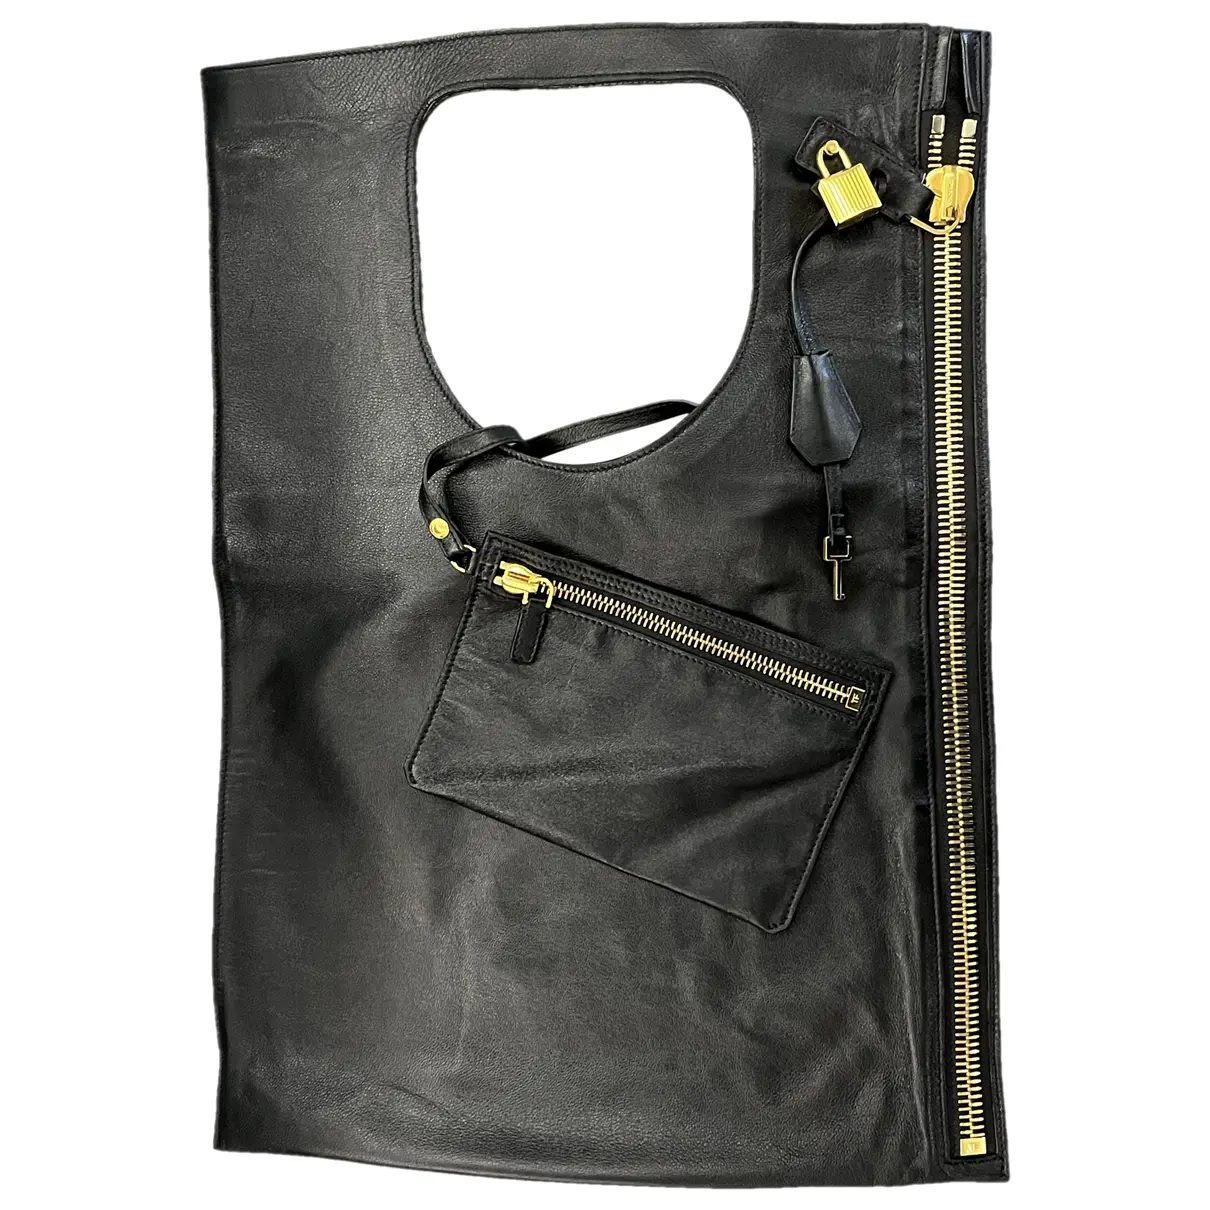 Alix leather handbag Tom Ford